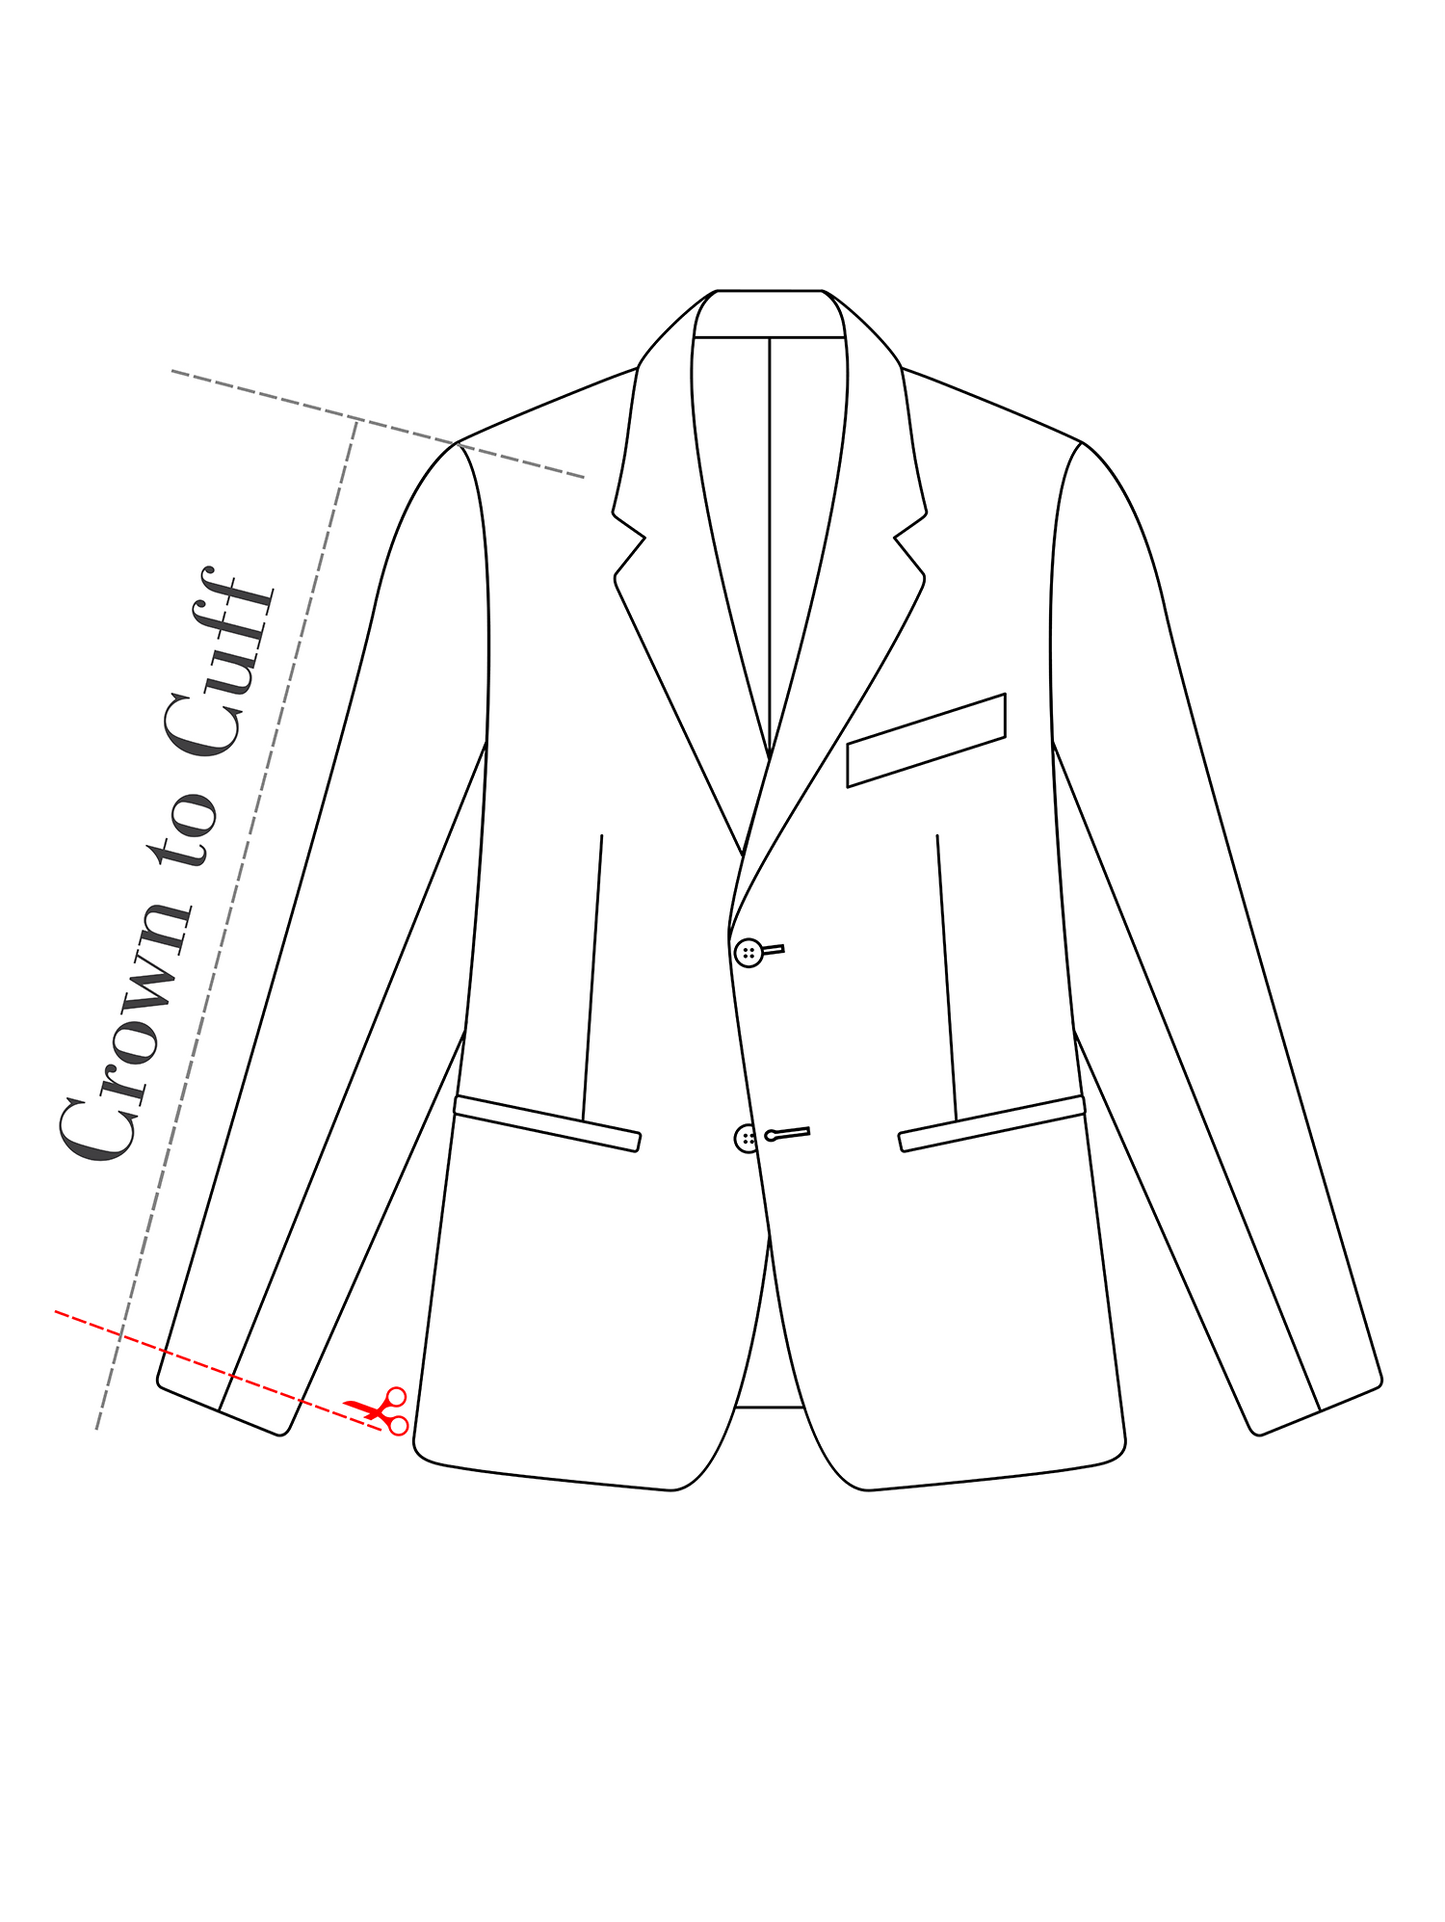 Sleeve Length on Blazer, Suit Jacket or Overcoat